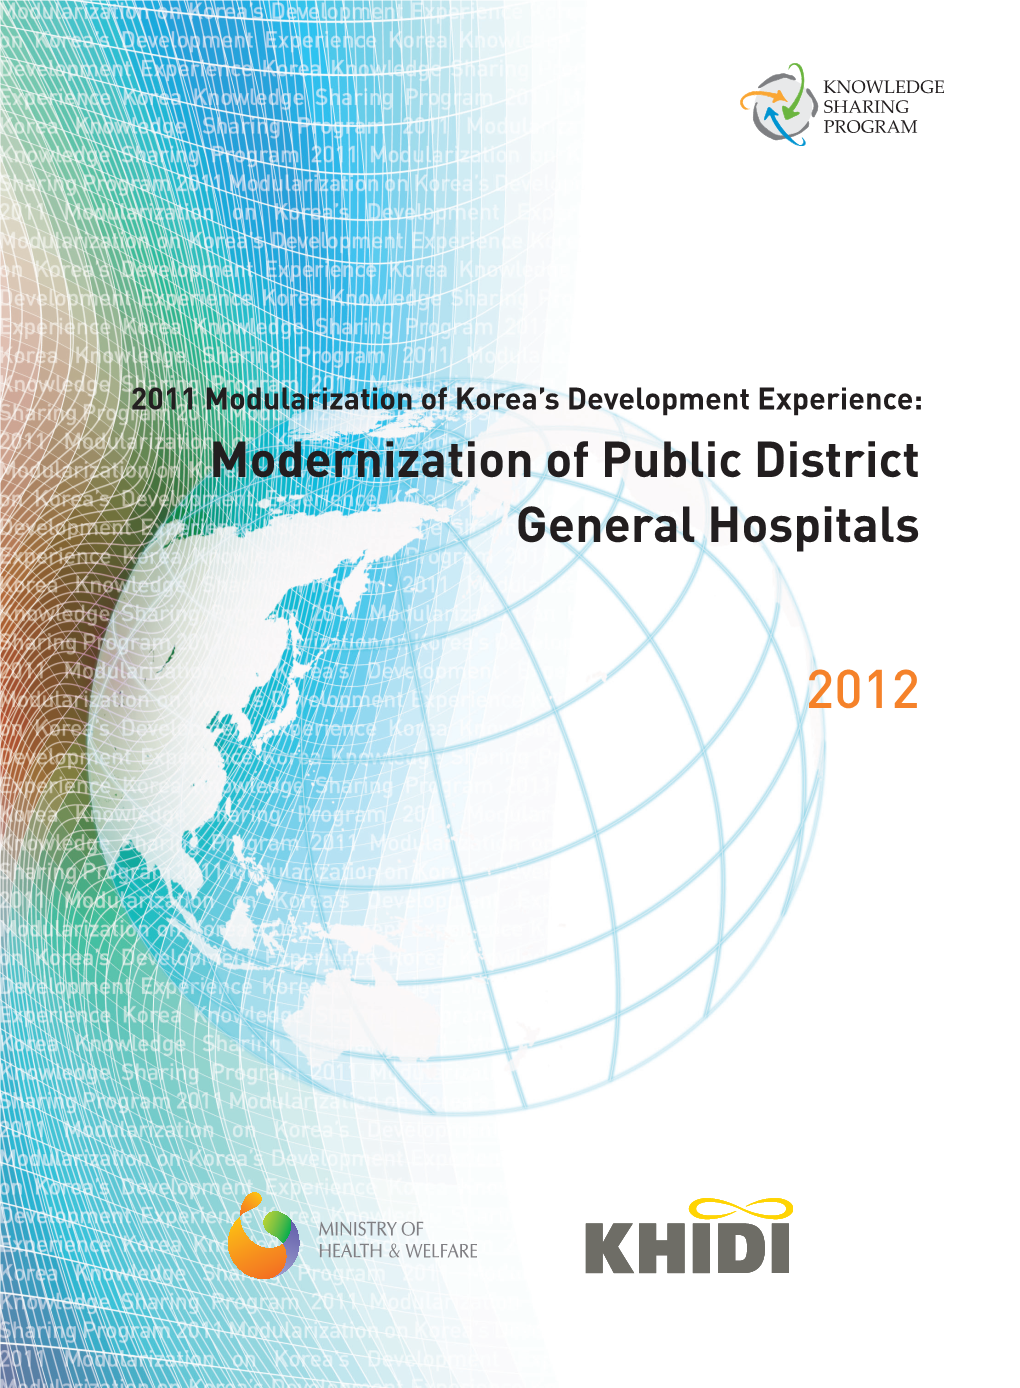 Modernization of Public District General Hospitals